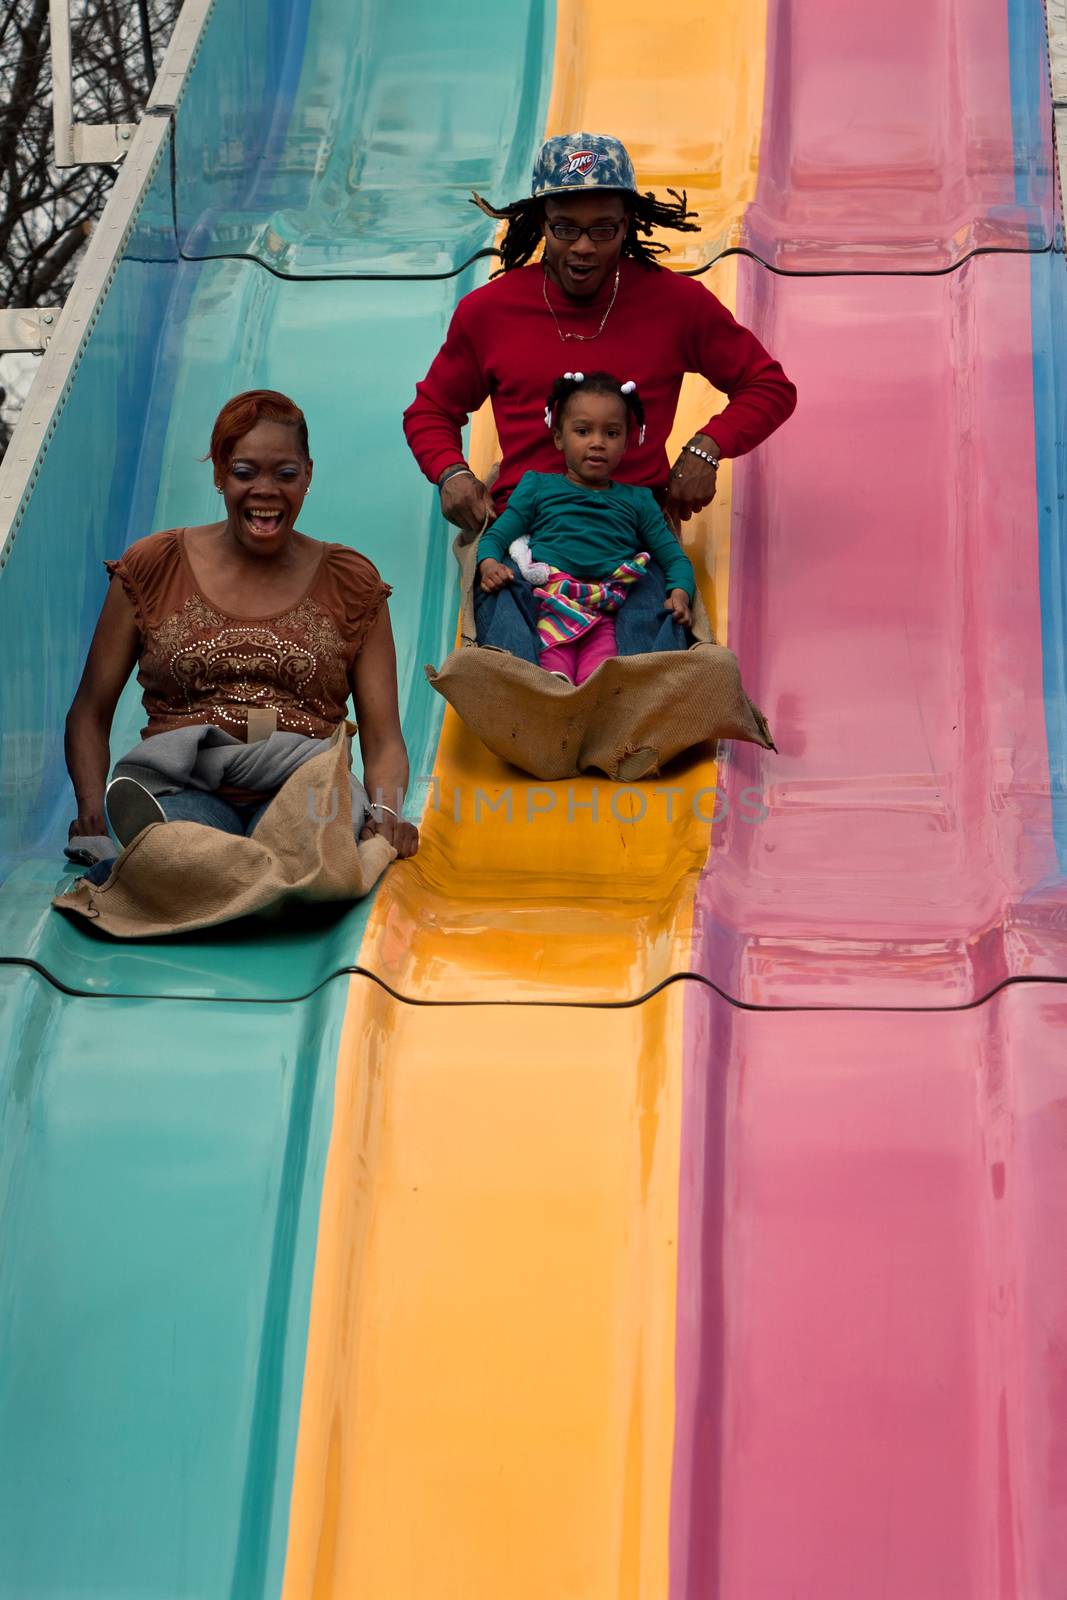 Family Goes Down Fun Slide At Atlanta Fair by BluIz60